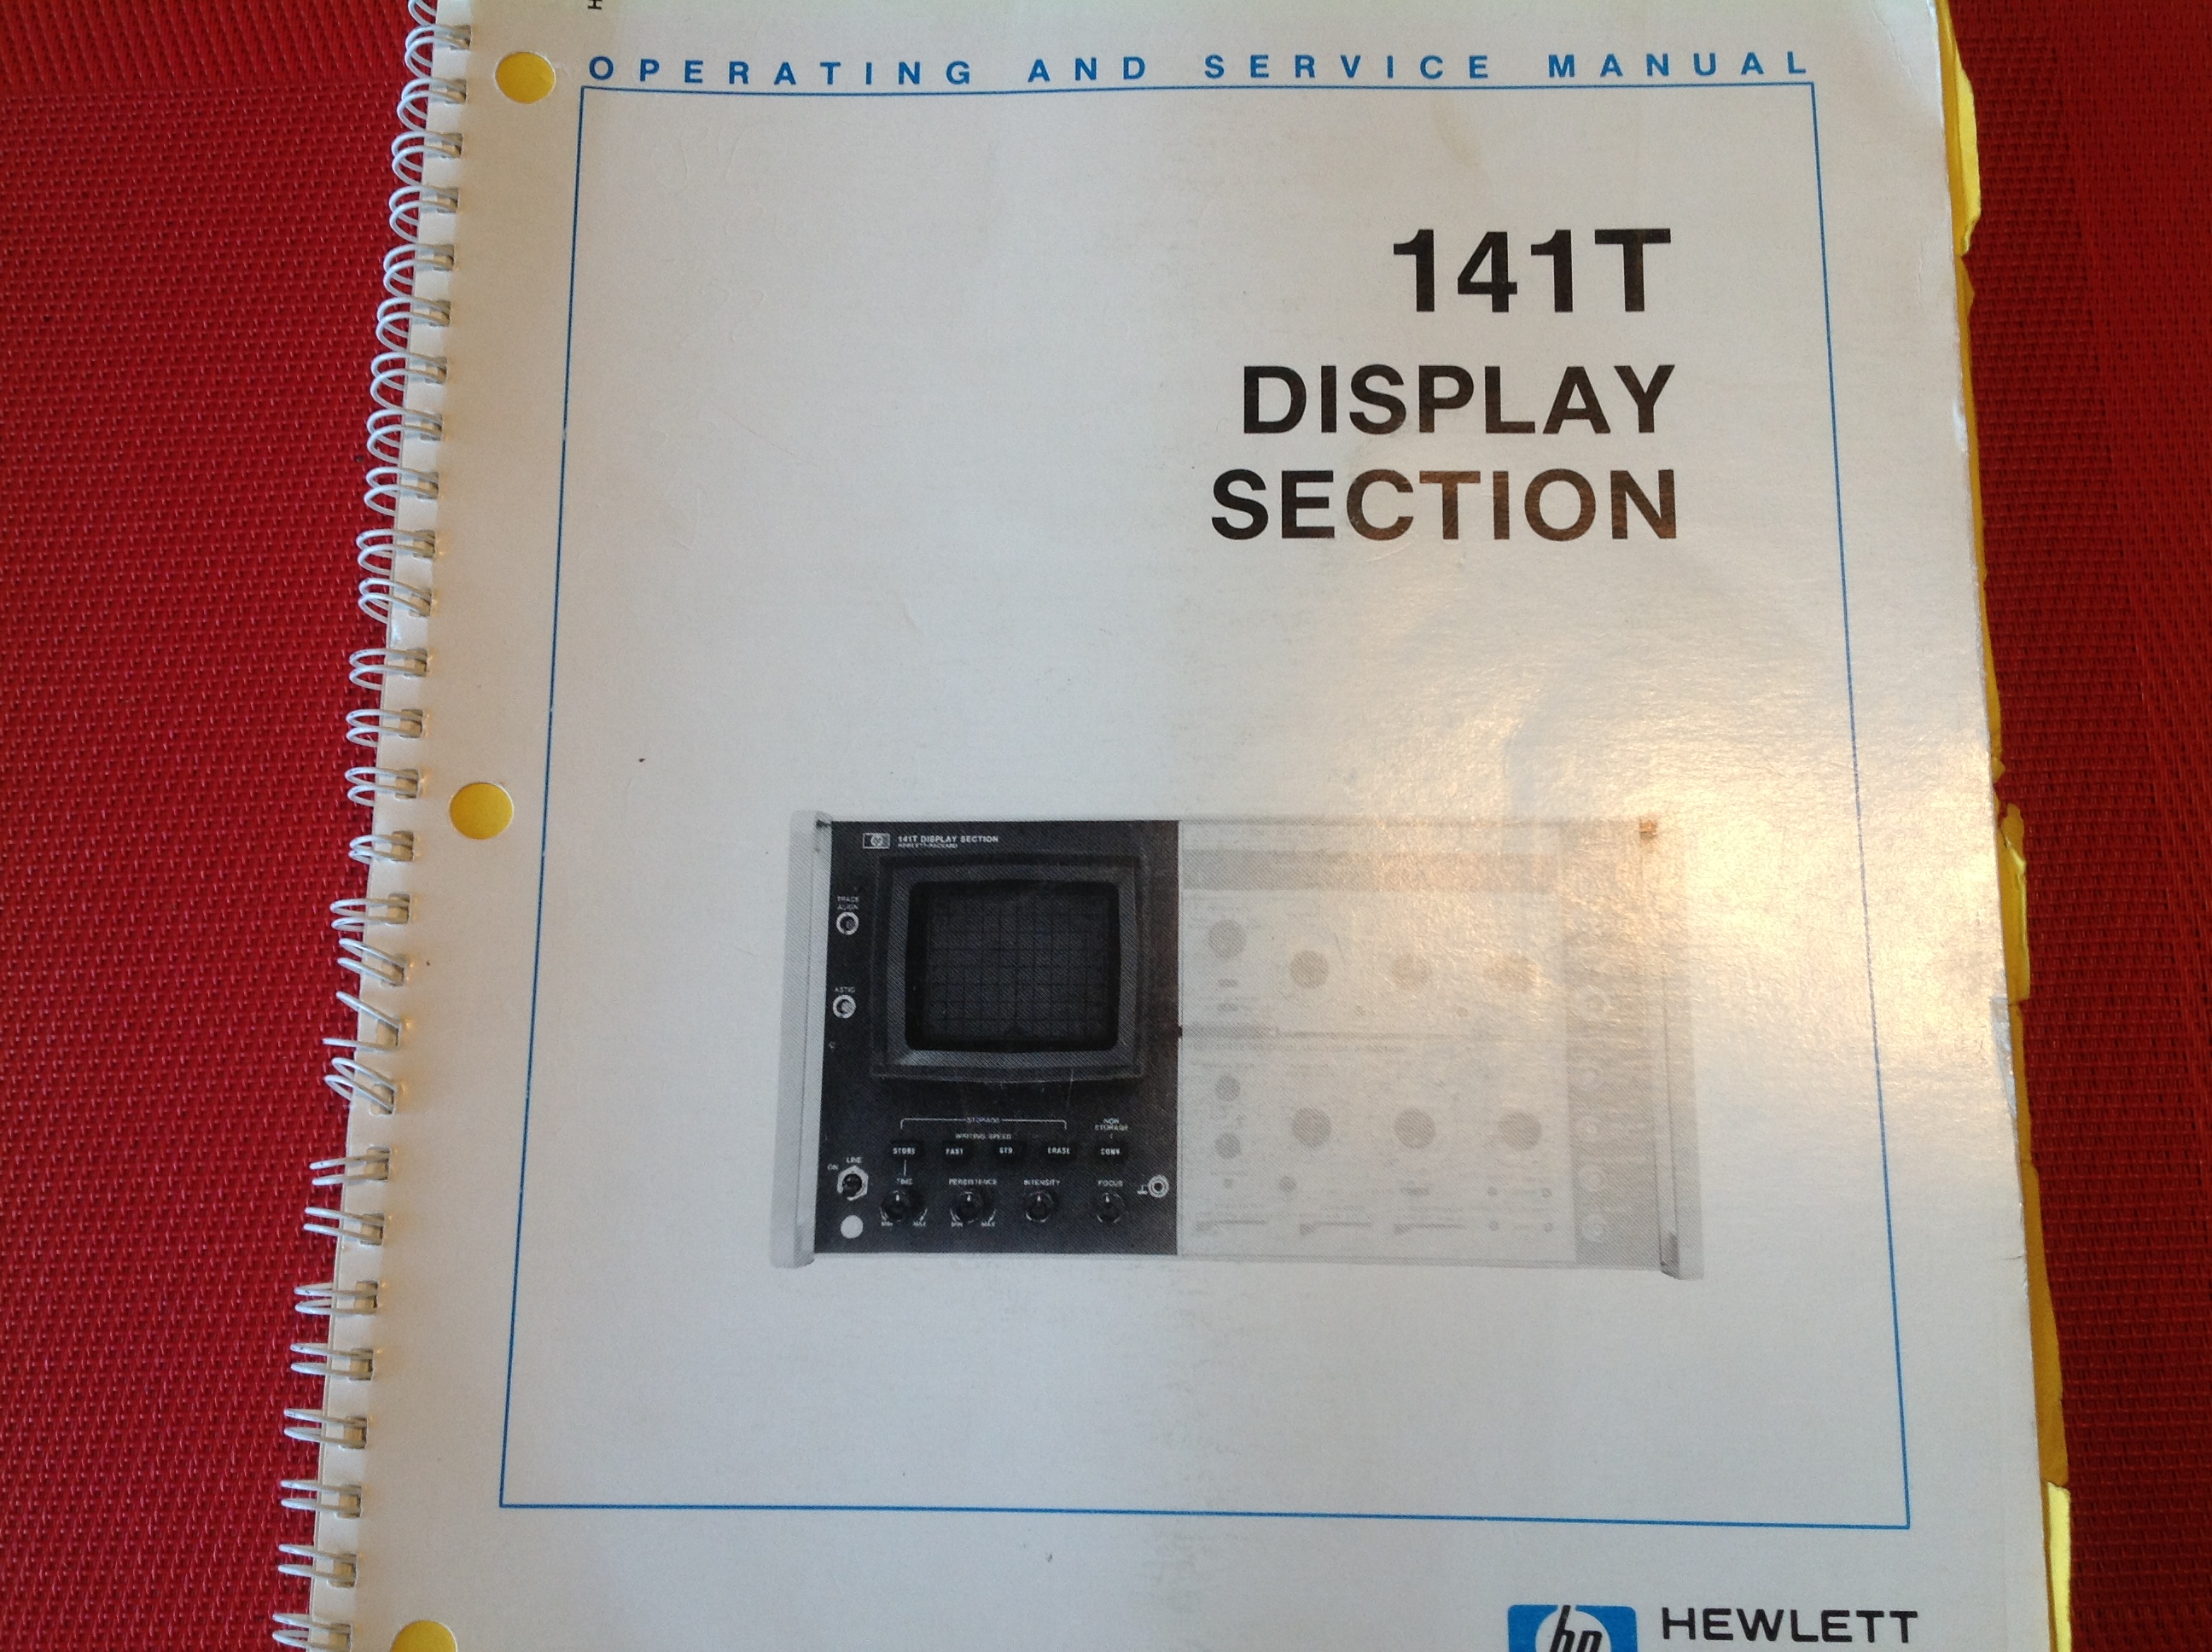 Hewlett Packard 141T Display Section